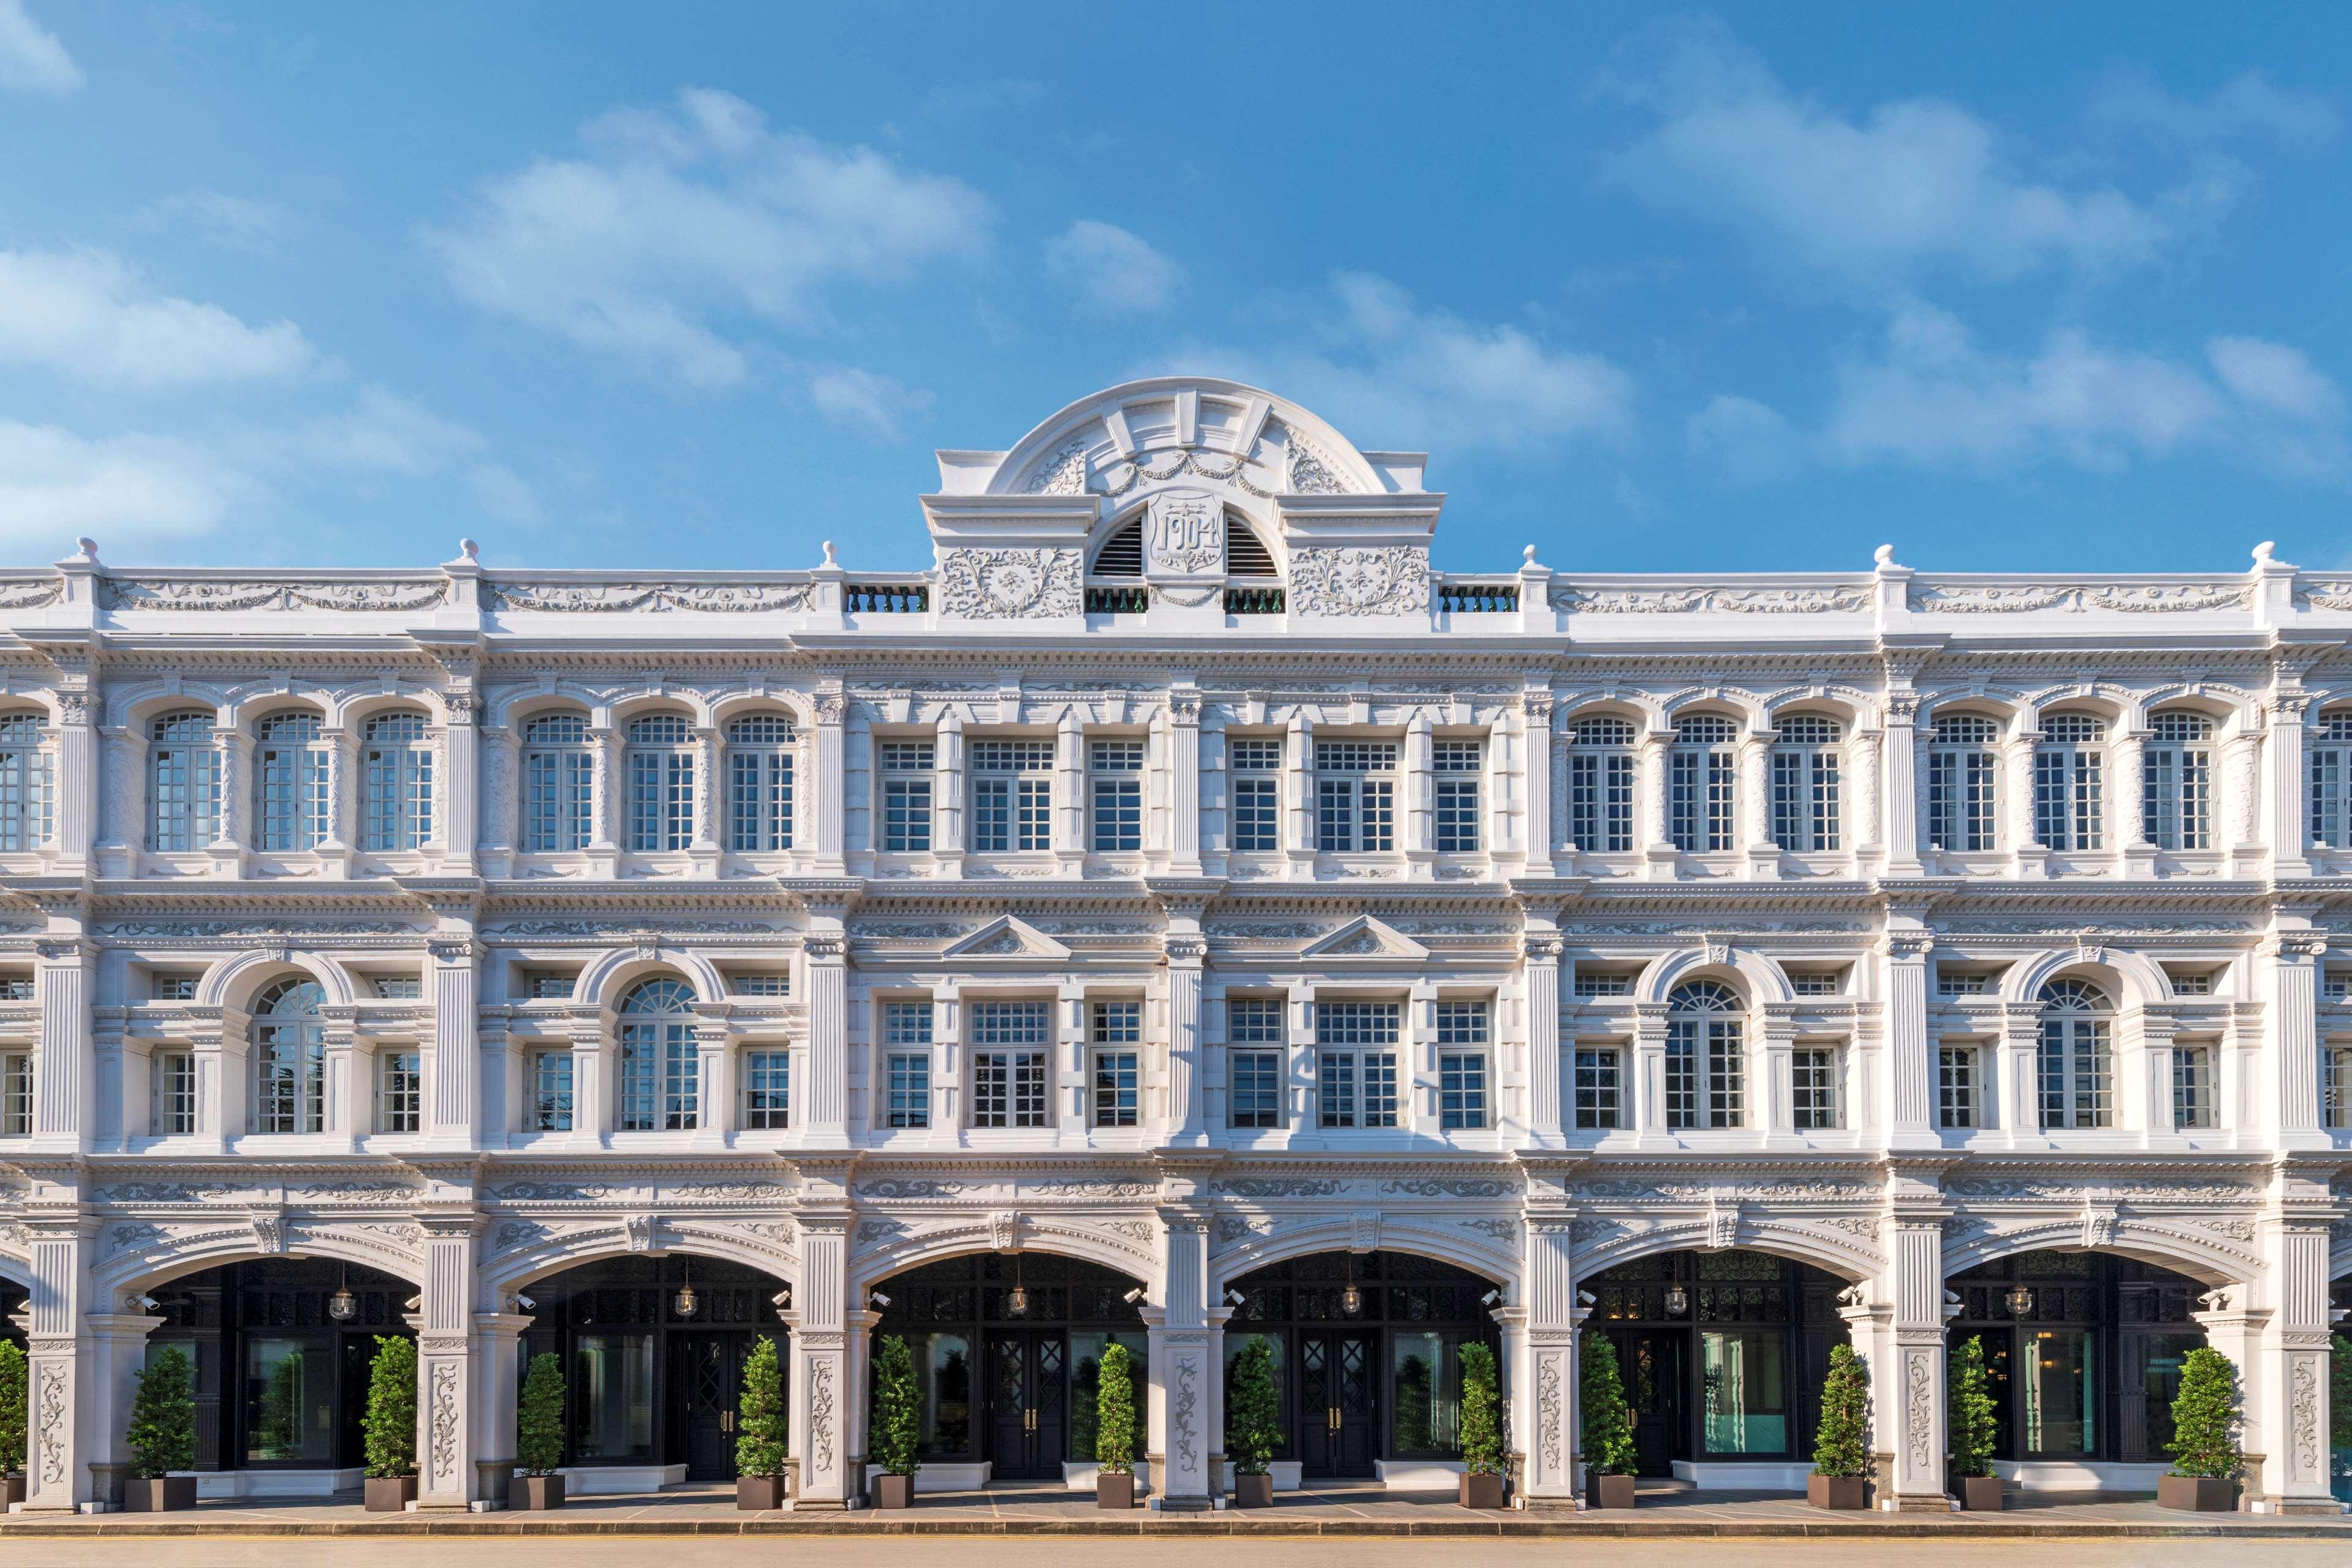 The Capitol Kempinski Hotel Singapura Exterior foto